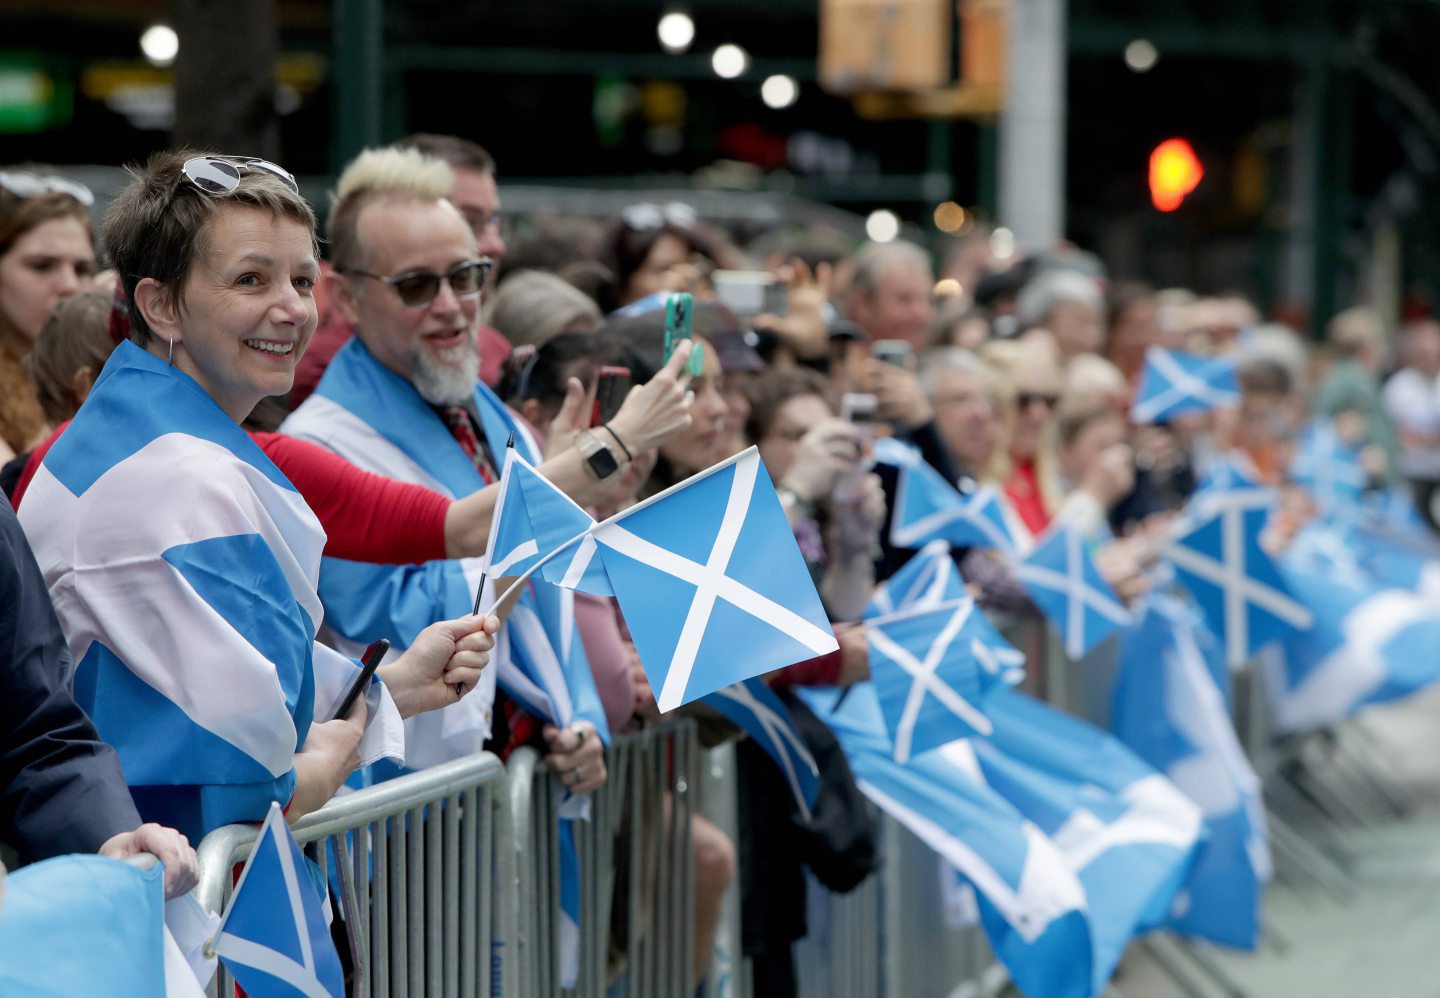 People standing waving Scotland flags.